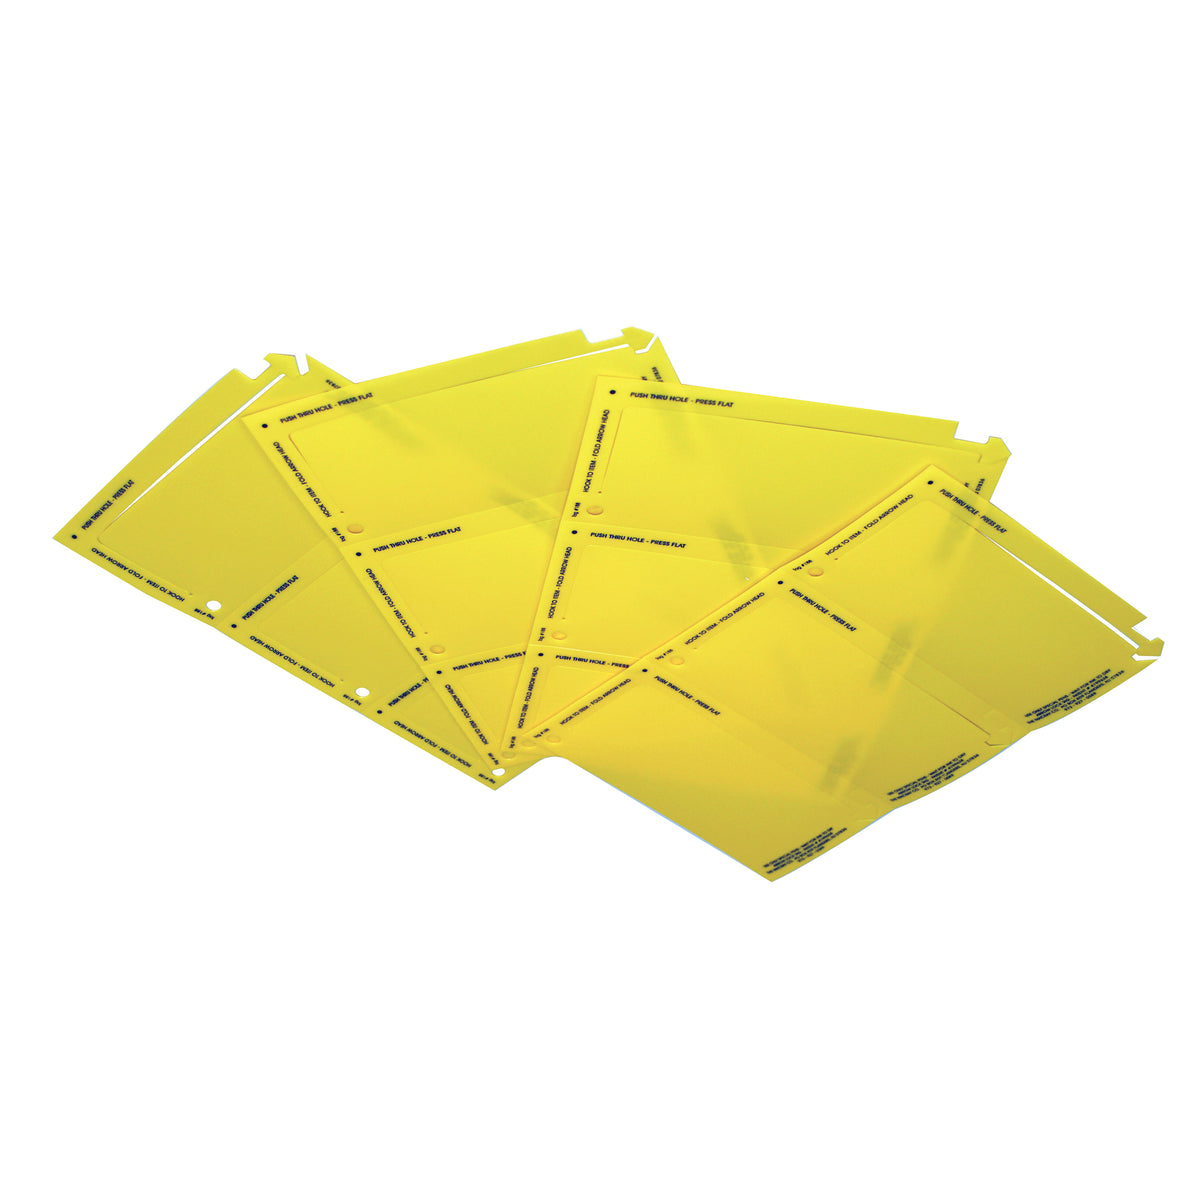 MacRay 188 YELLOW Arrow Lock Identification Tags, 150 Pack - Yellow